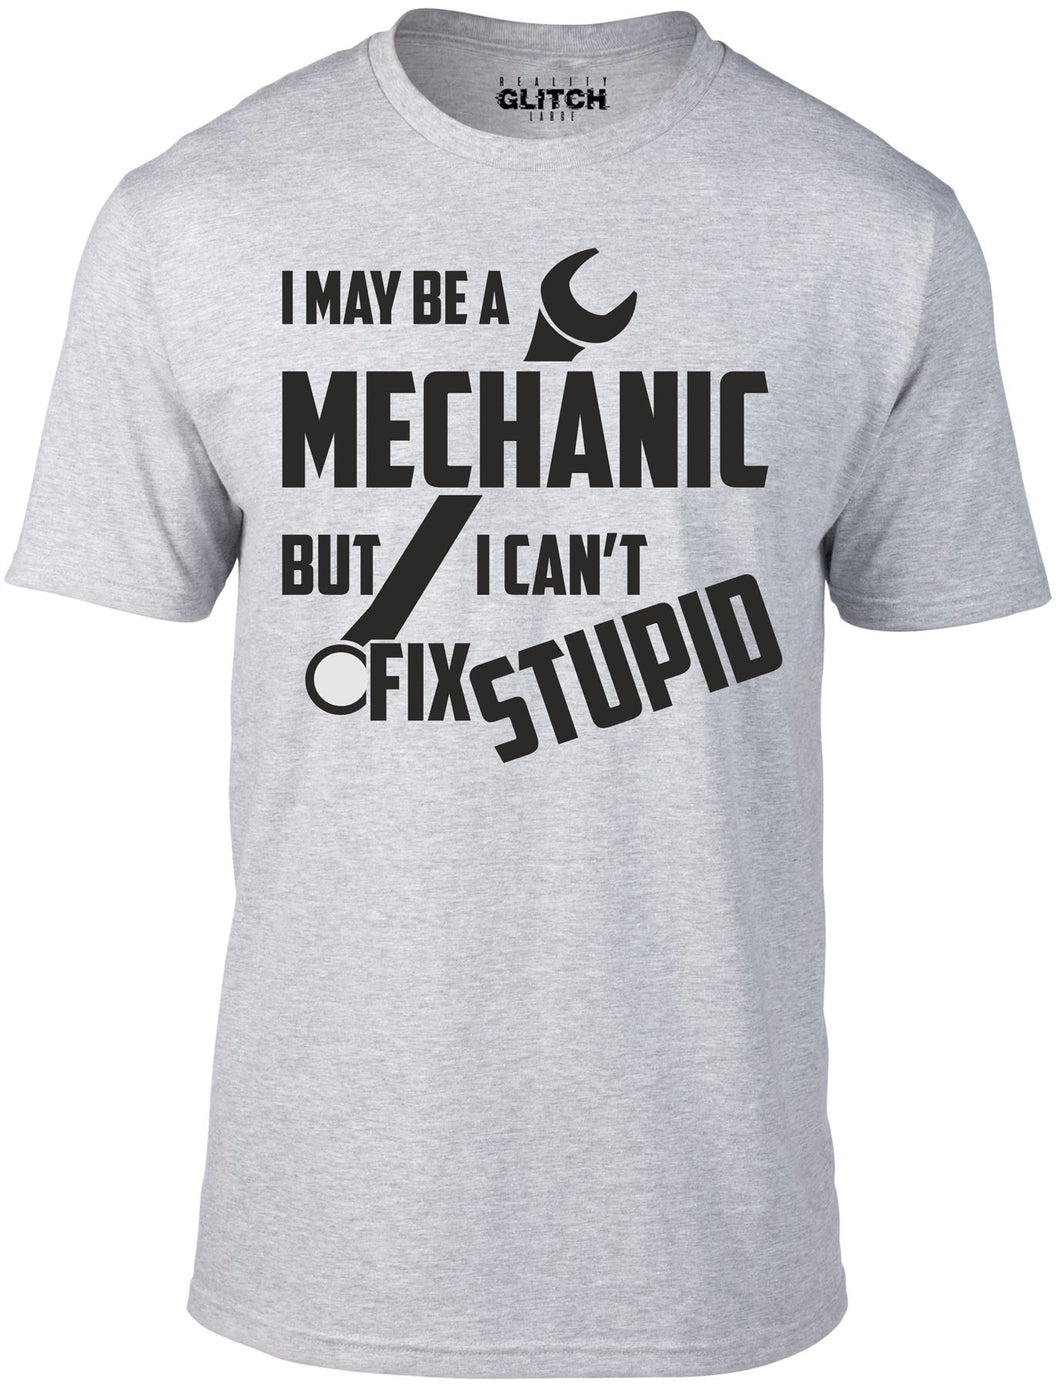 Men's Light Grey T-shirt With a  Printed Design